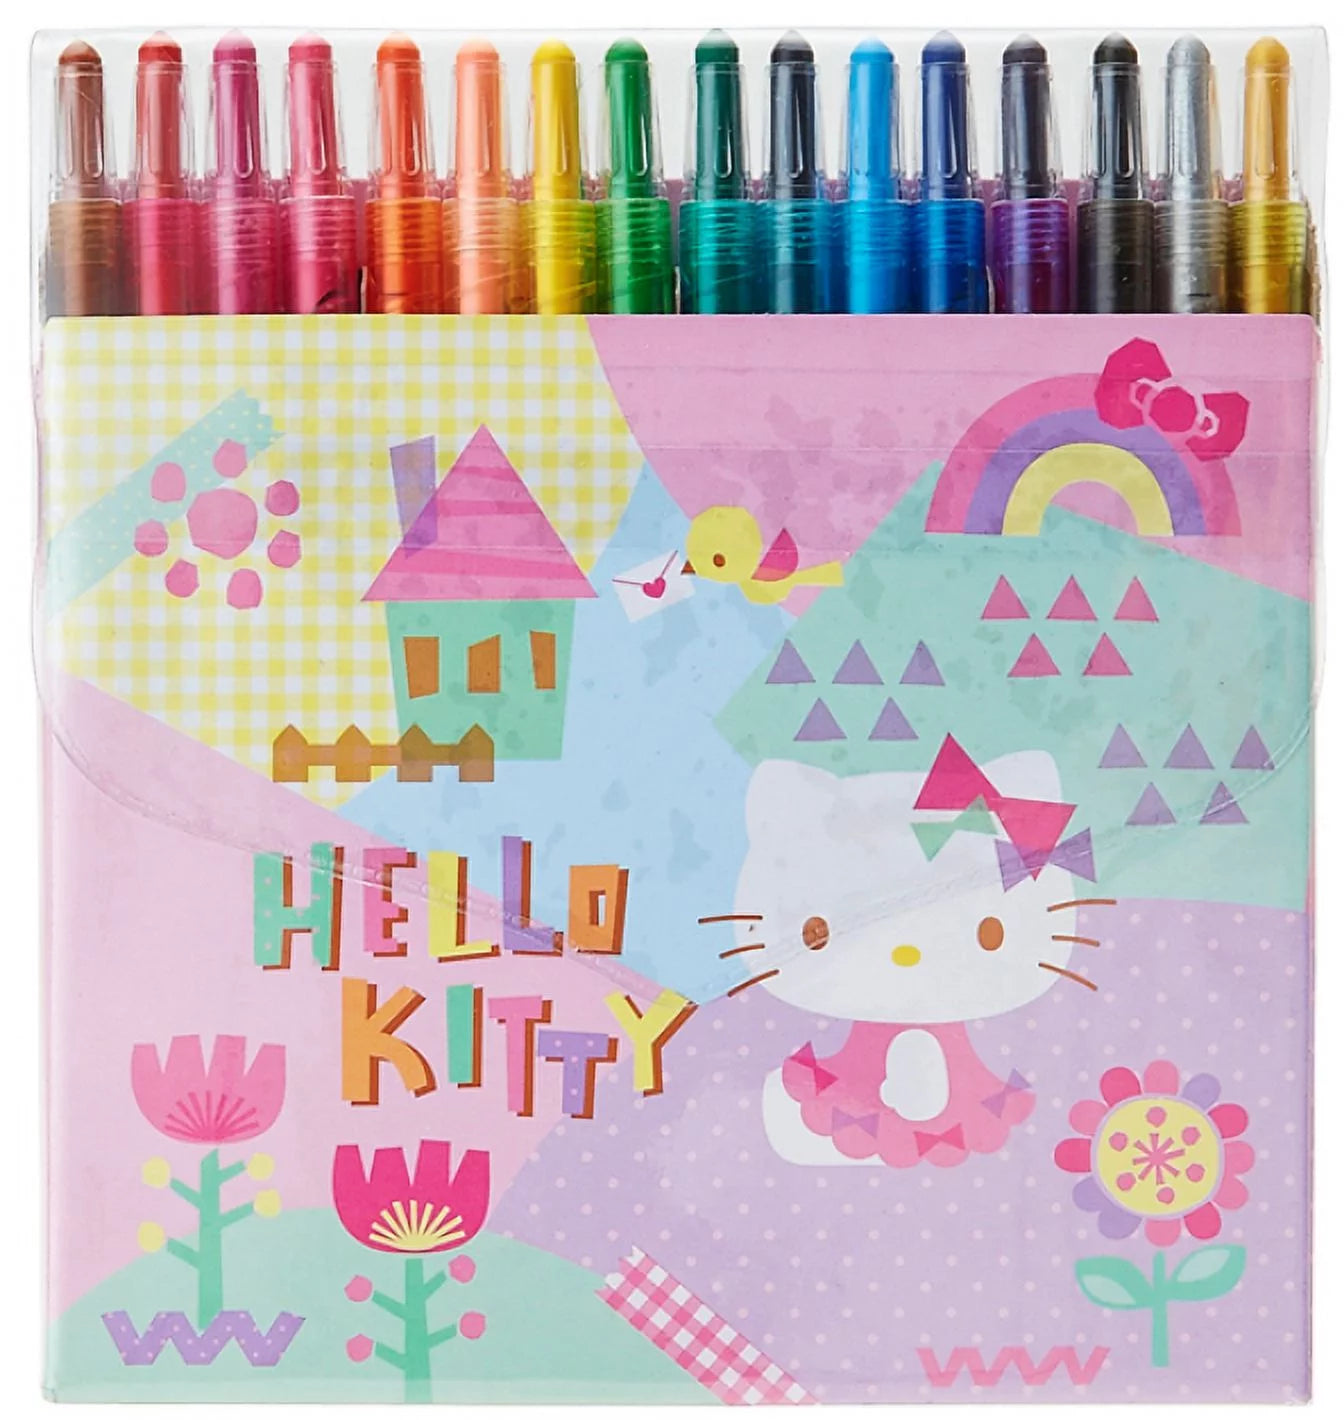 Neko Hello Kitty 16 Color Twist-Up Crayon Set